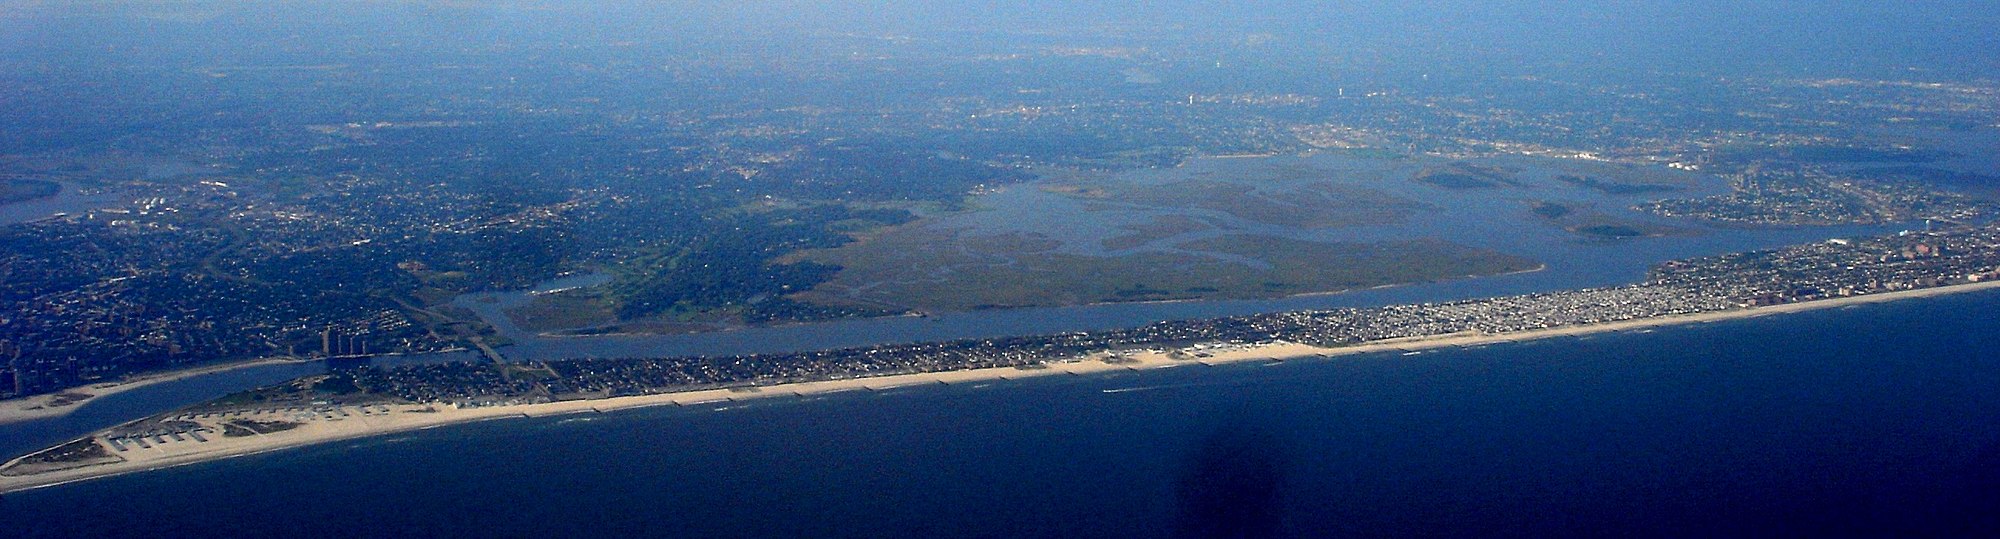 Panorama of Long Beach